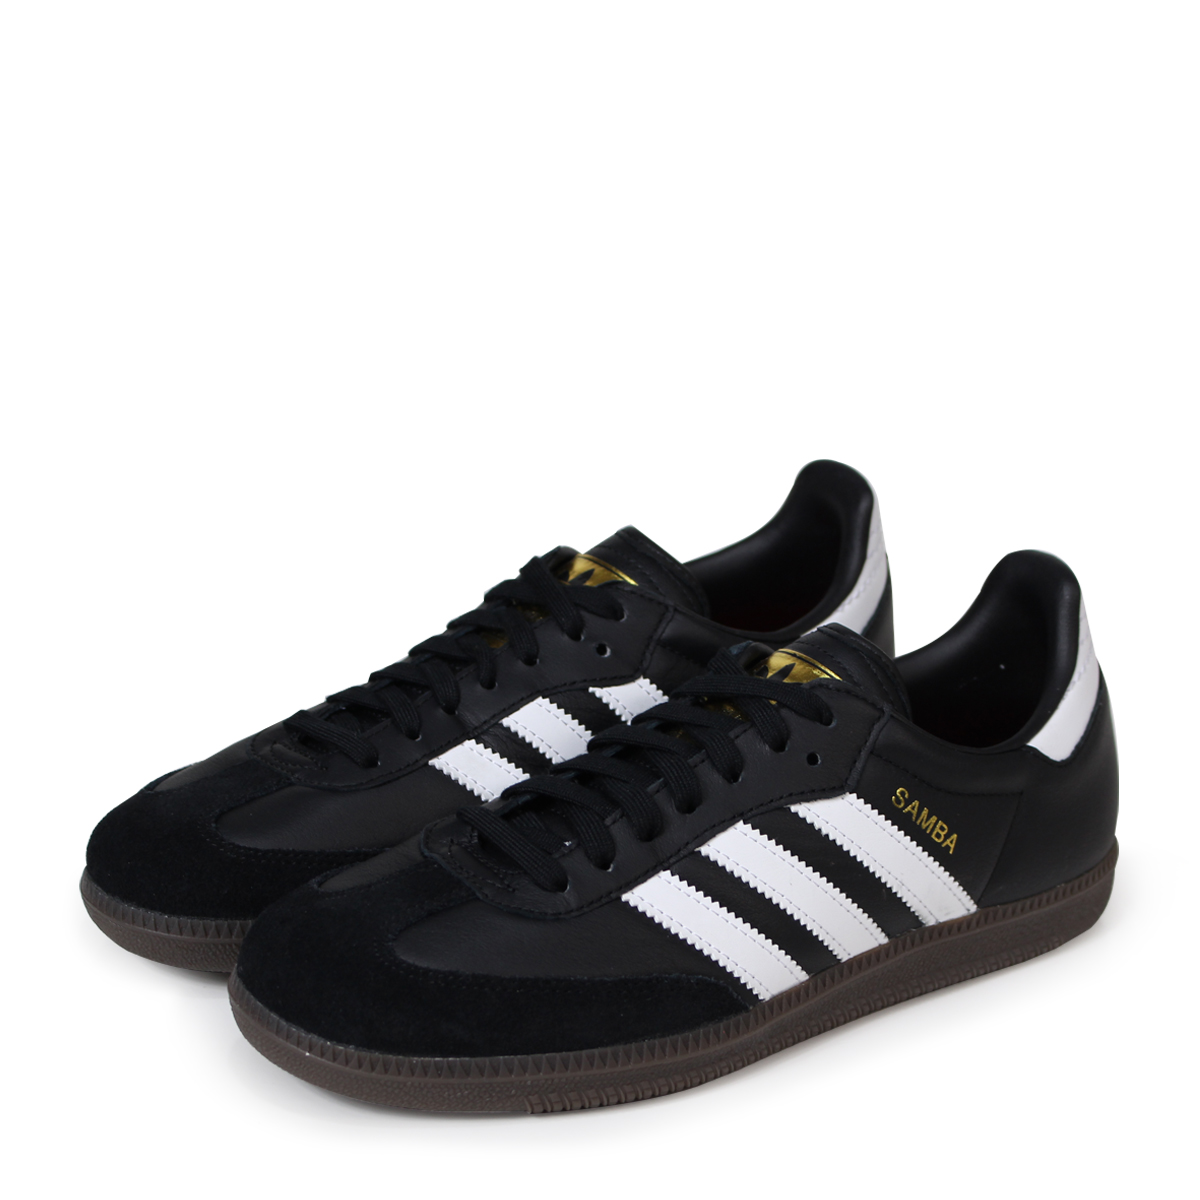 black samba adidas Online Shopping for 